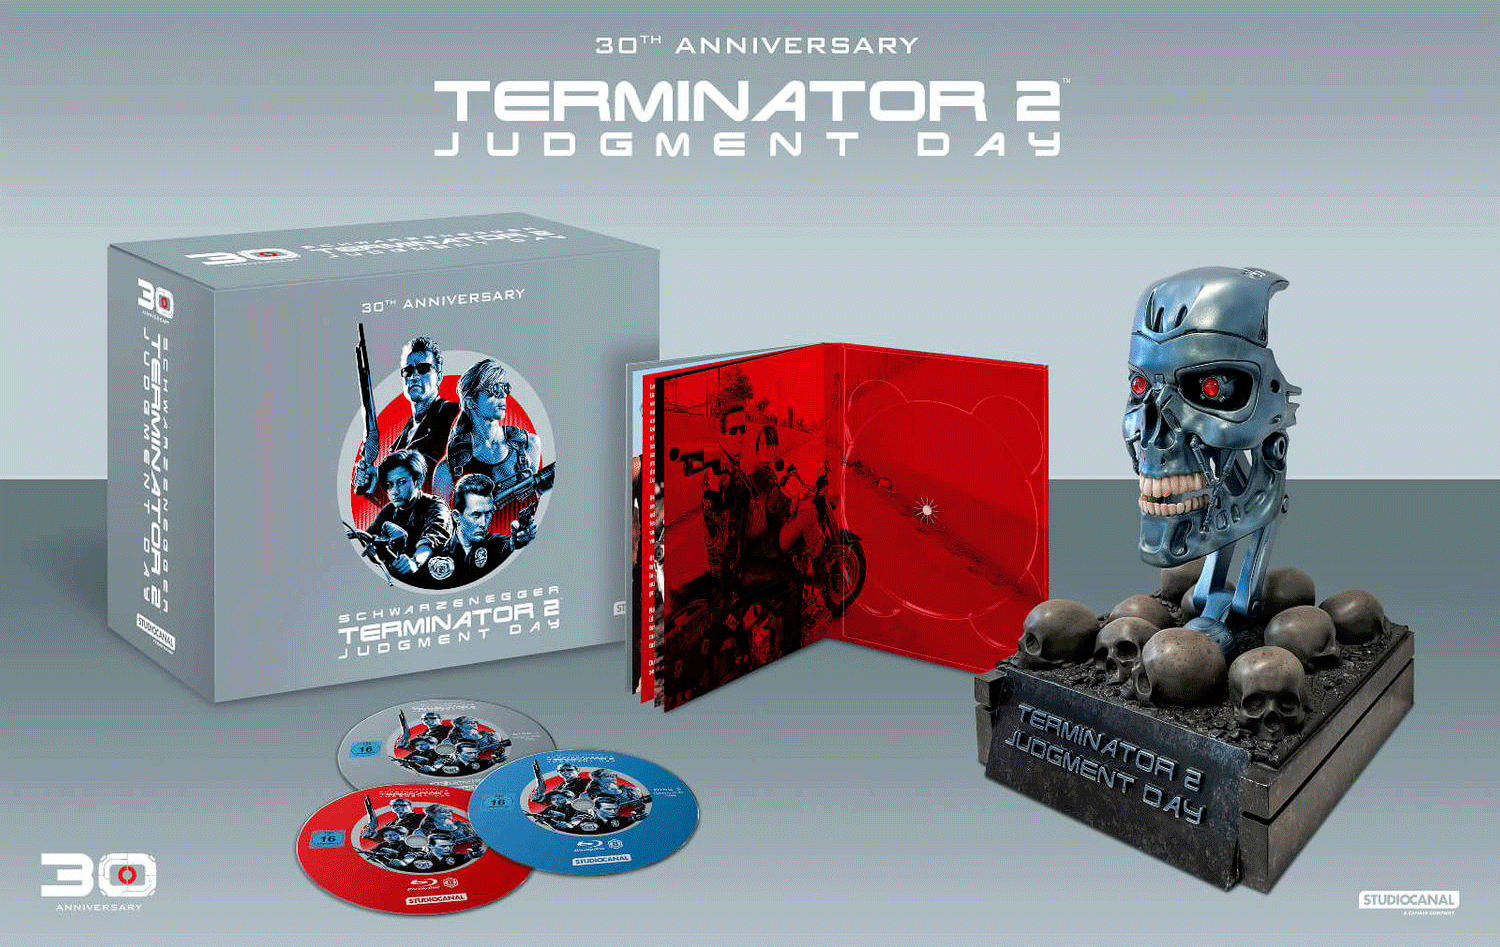 Day judgment terminator 2 Download Terminator